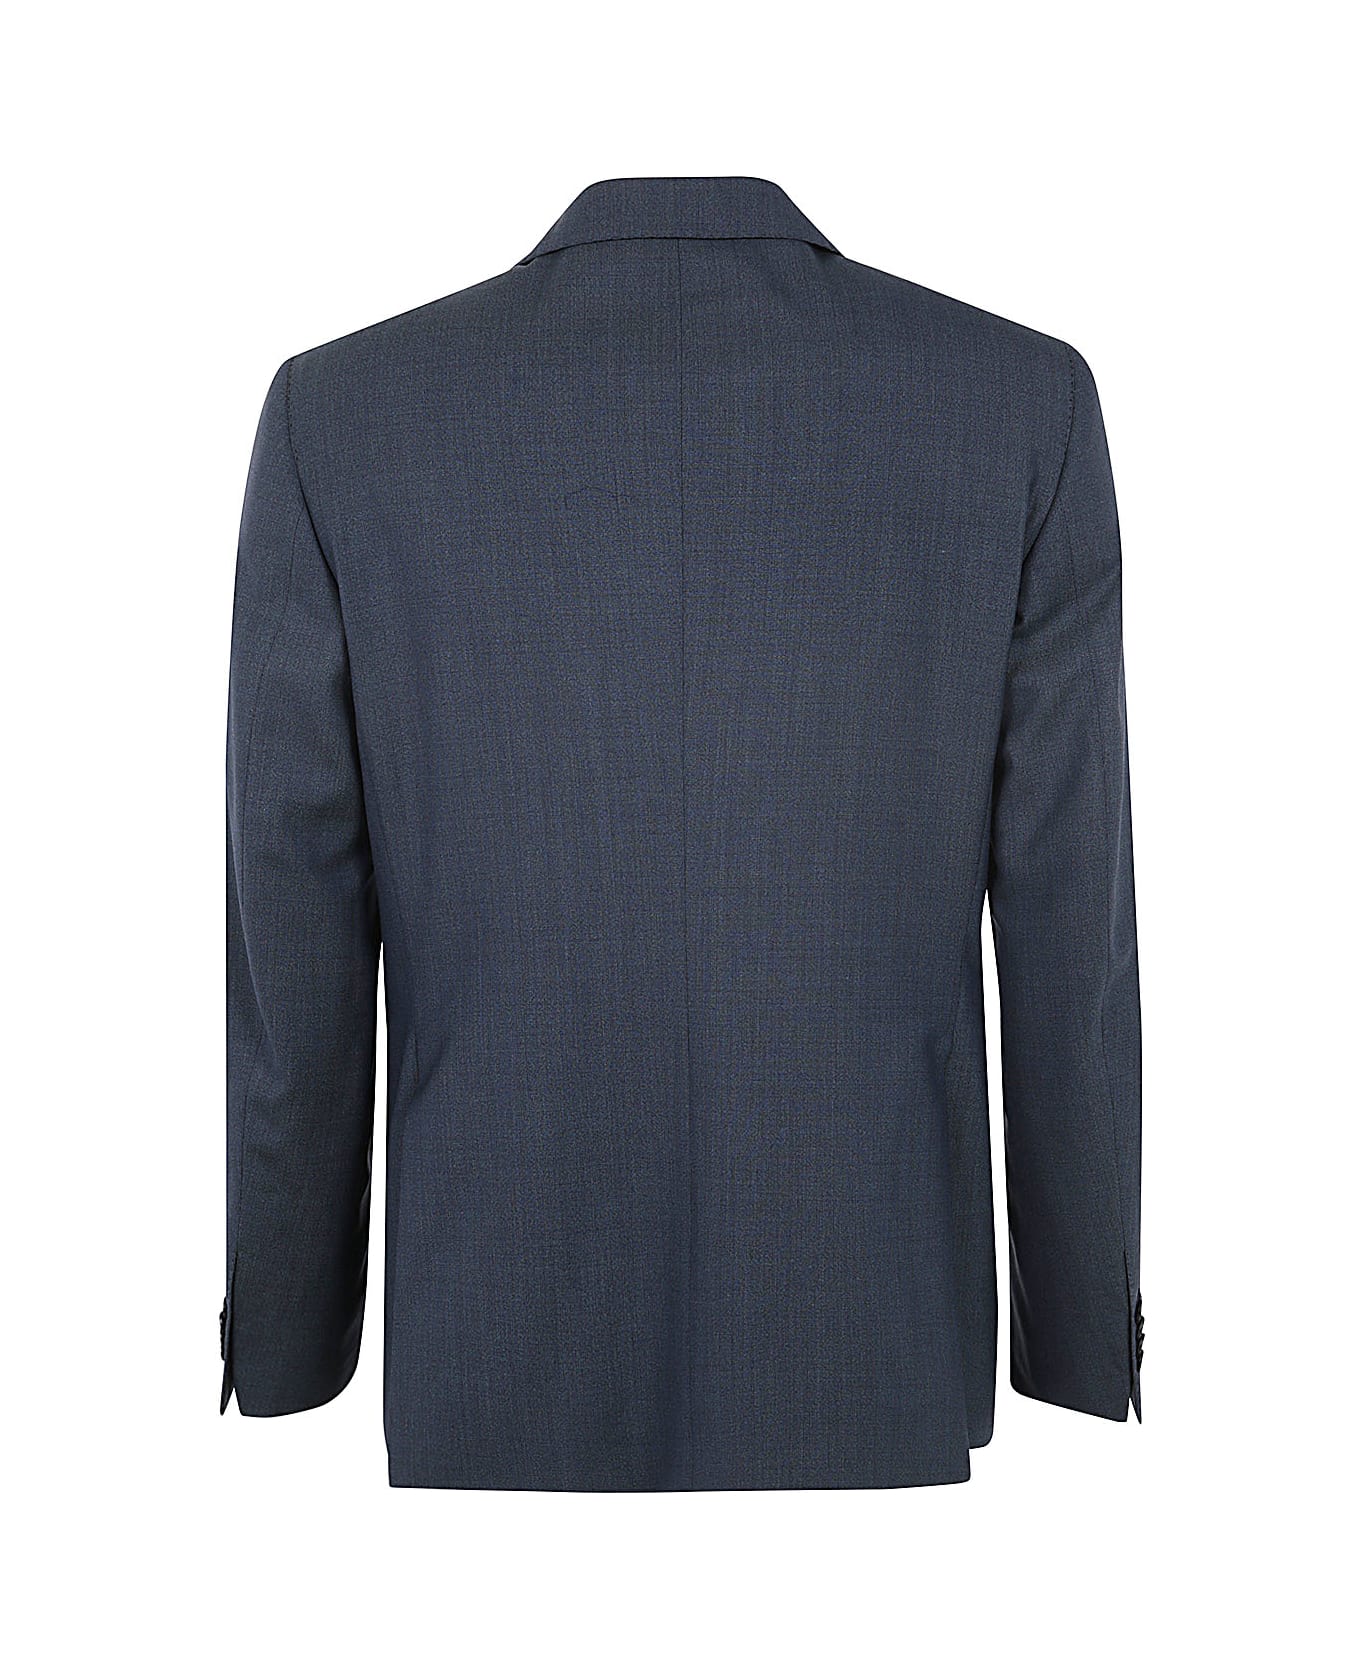 Tagliatore Suit - Petrol Blue スーツ